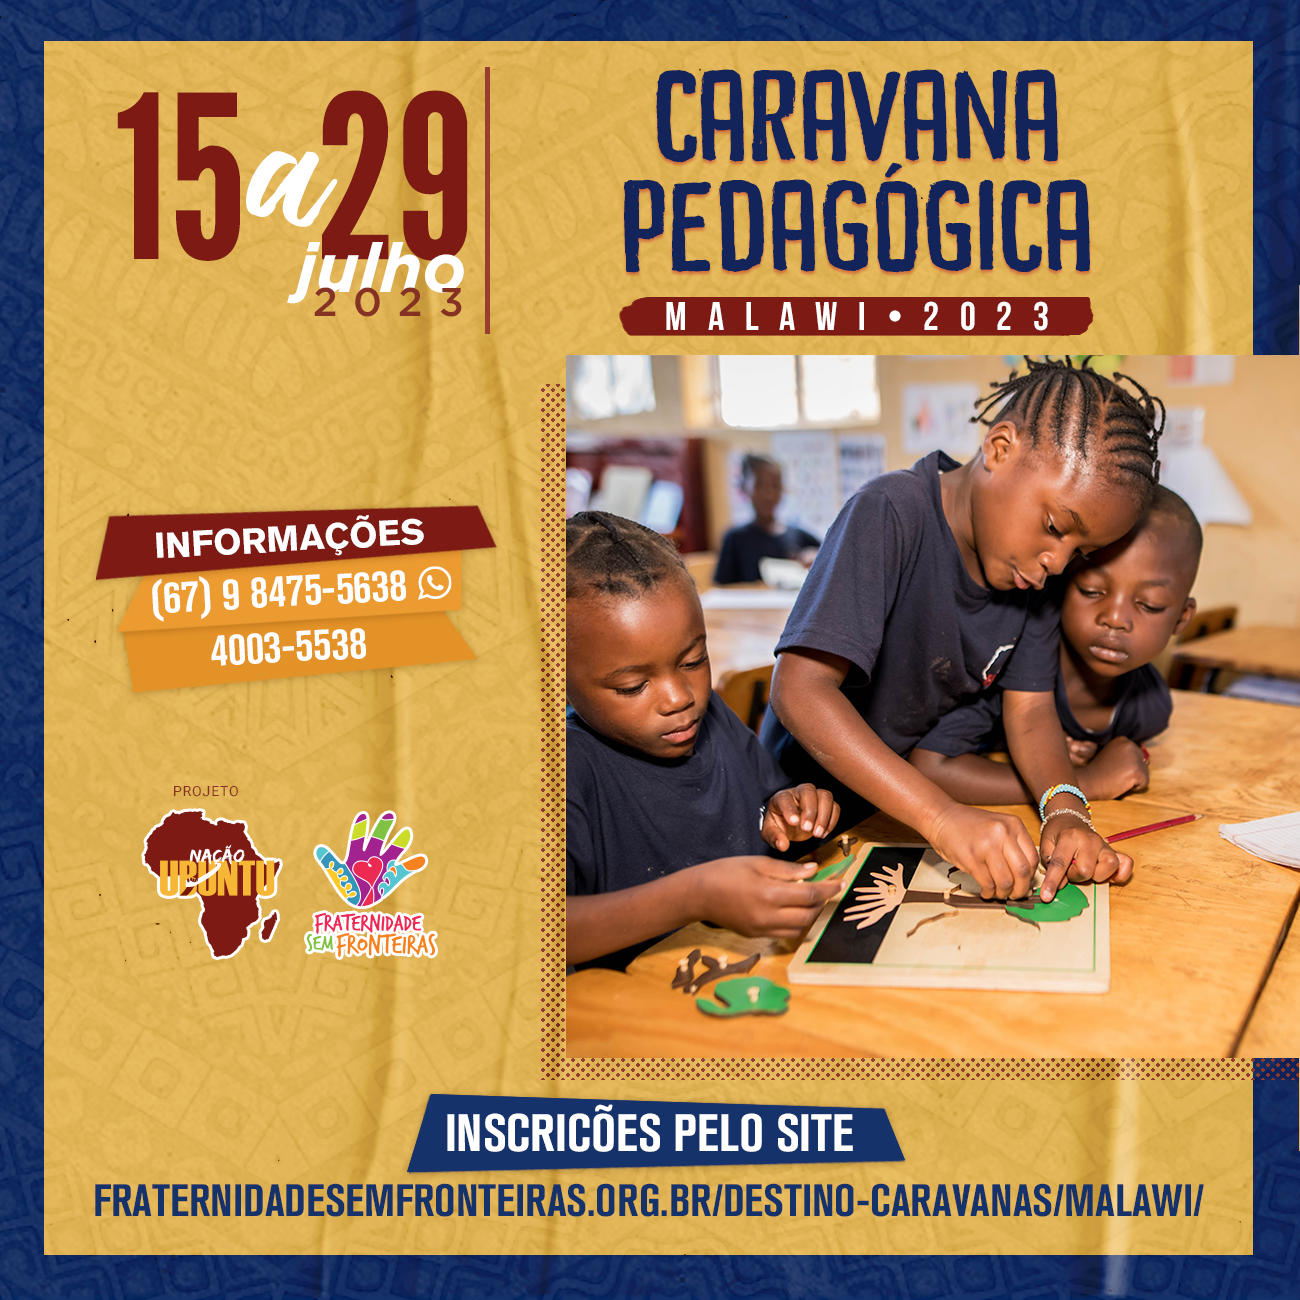 pedagogia__Caravana-MALAWI.png